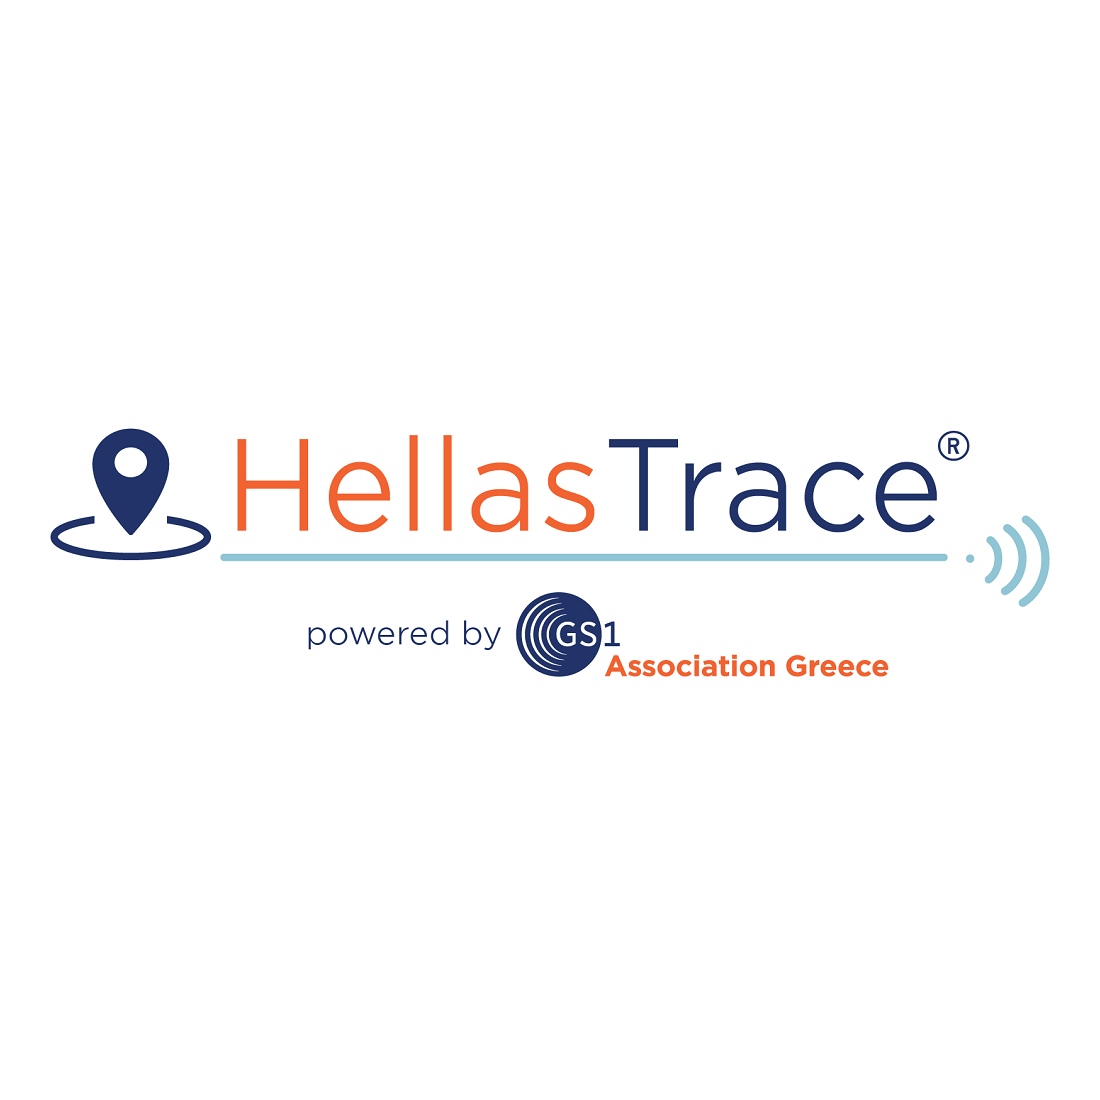 HellasTrace: Μία σύγχρονη λύση για την ιχνηλασιμότητα, ένα επιπλέον ανταγωνιστικό πλεονέκτημα για τις ελληνικές επιχειρήσεις